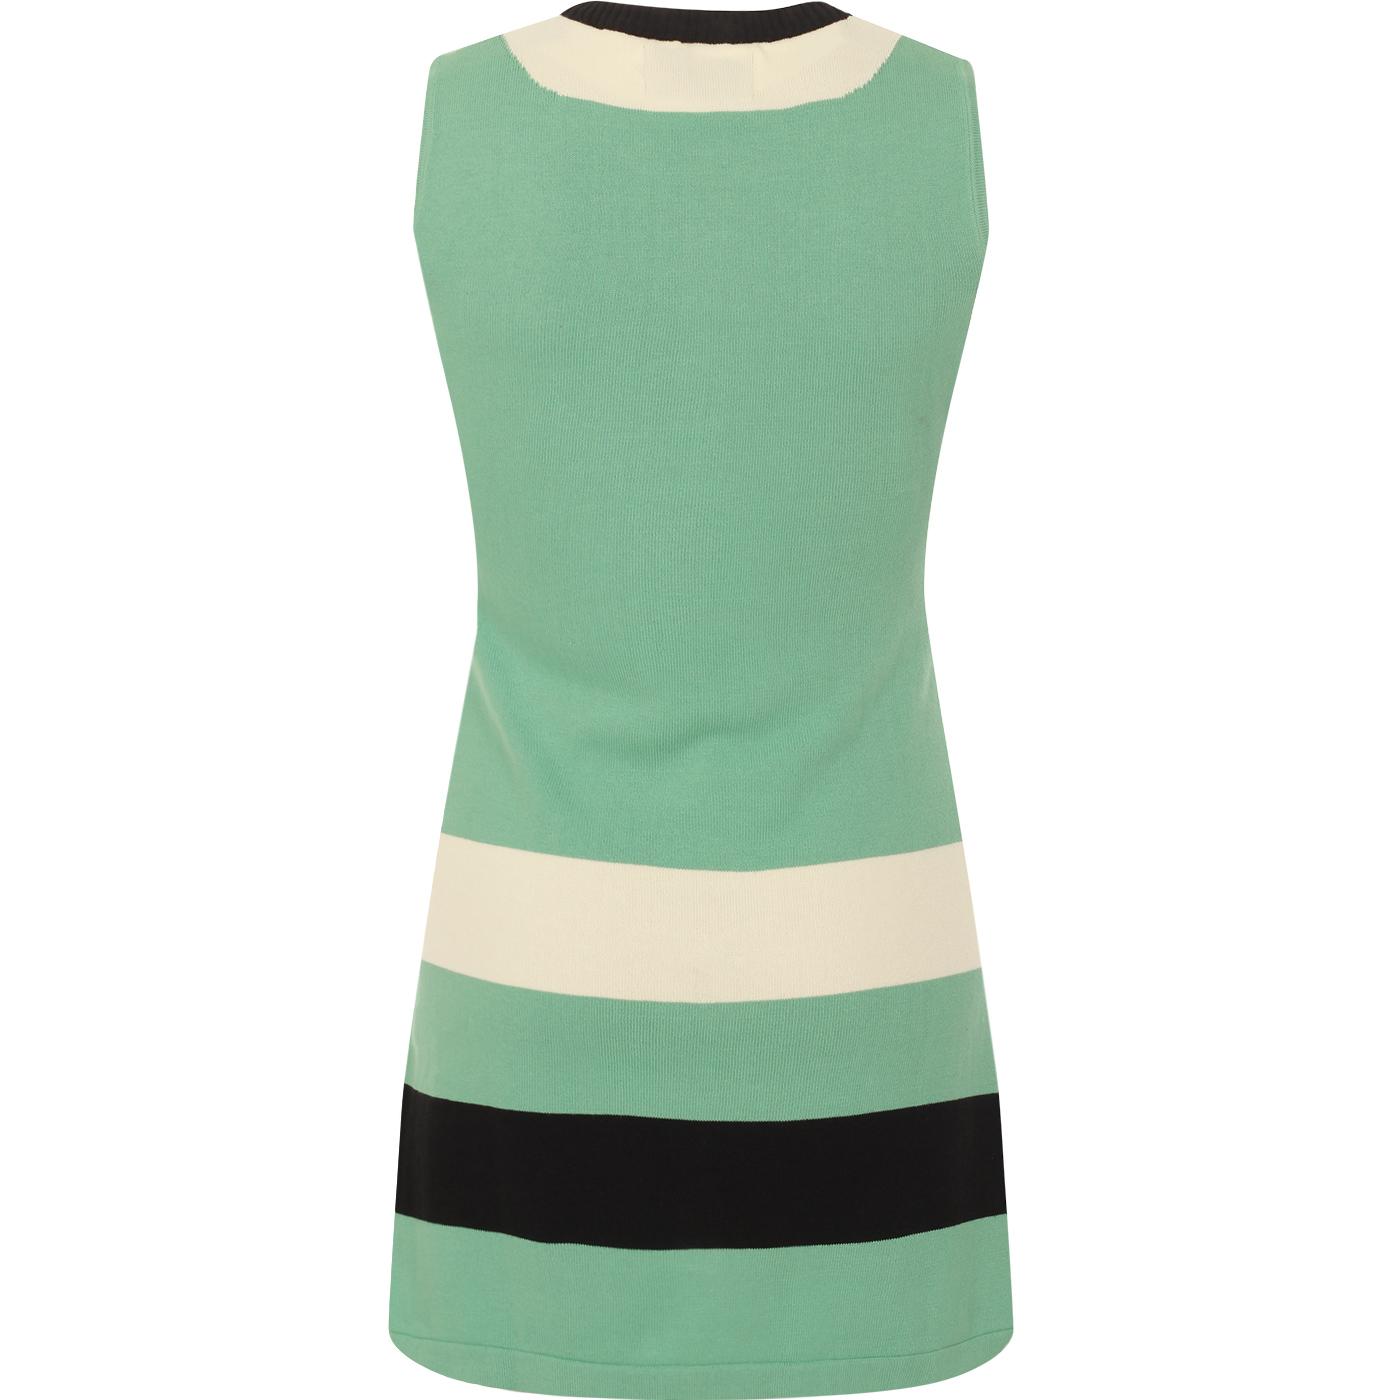 MADCAP ENGLAND Lantana 1960s Mod Knitted Dress in Katydid Green